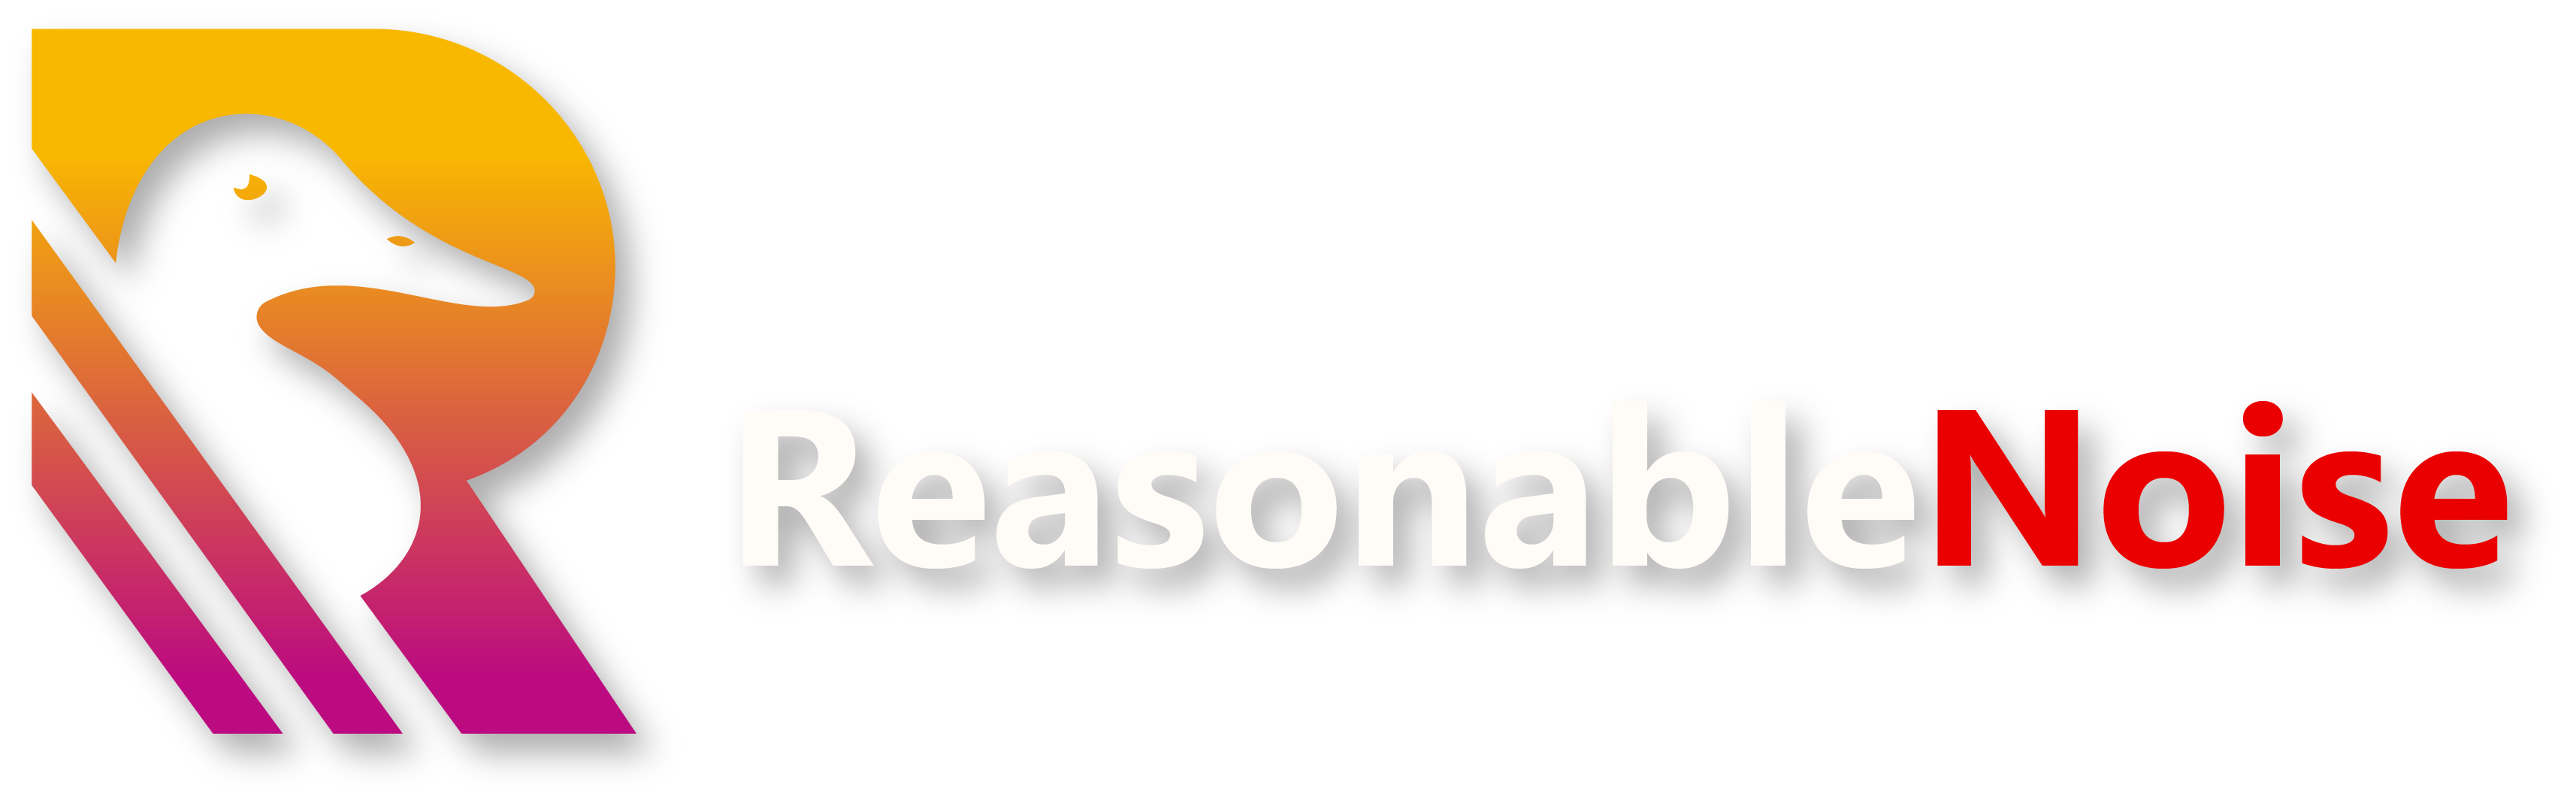 reasonablenoise